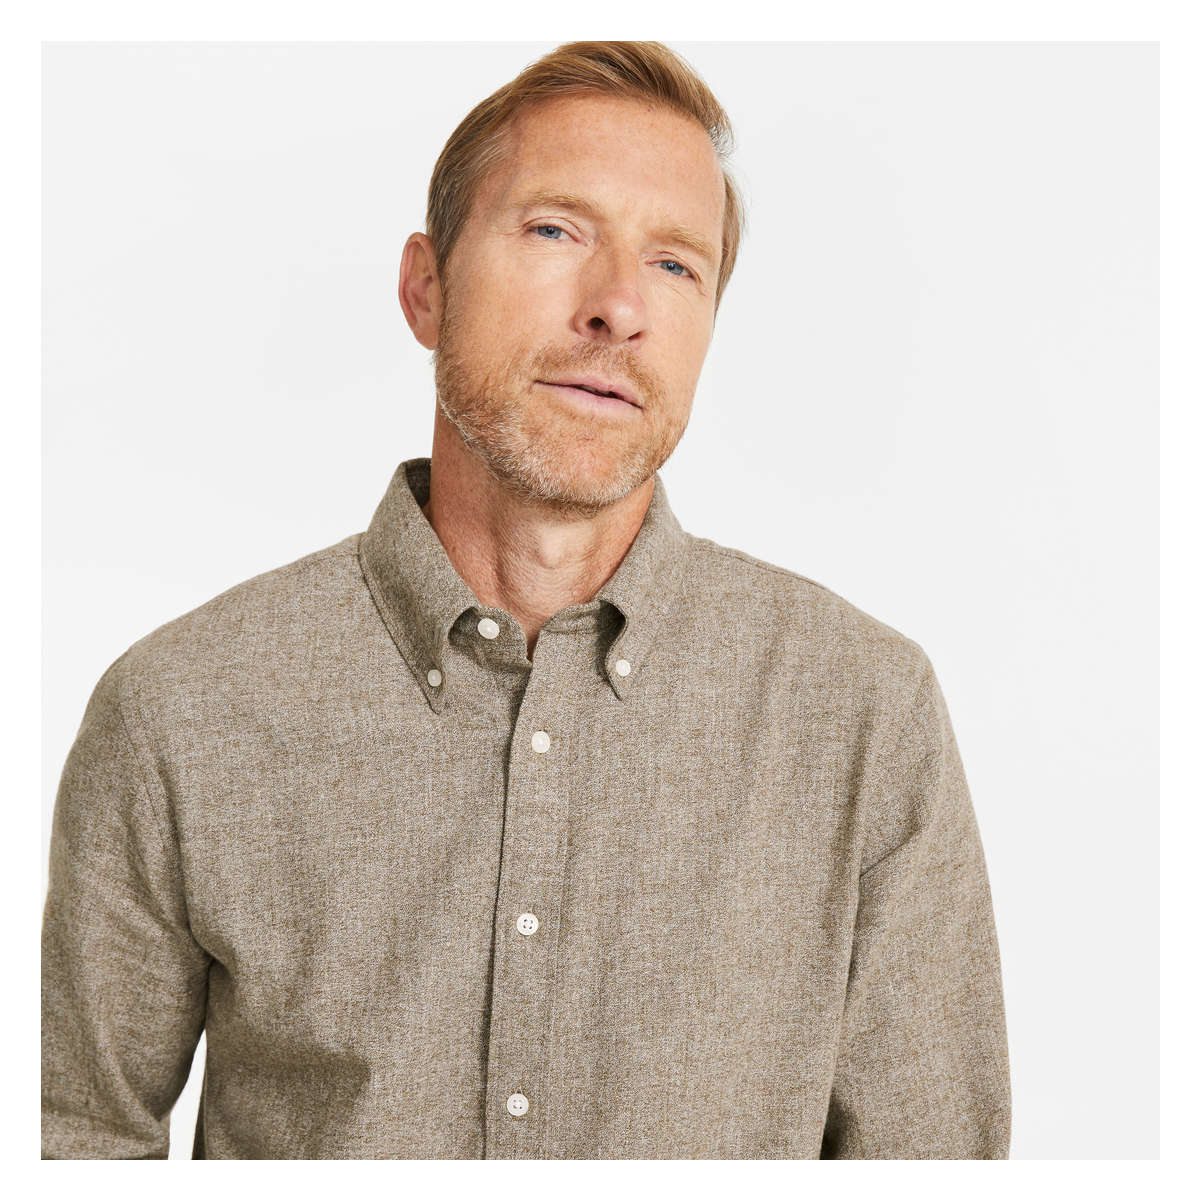 Men's Button-Down Flannel Shirt in Light Brown Mix from Joe Fresh